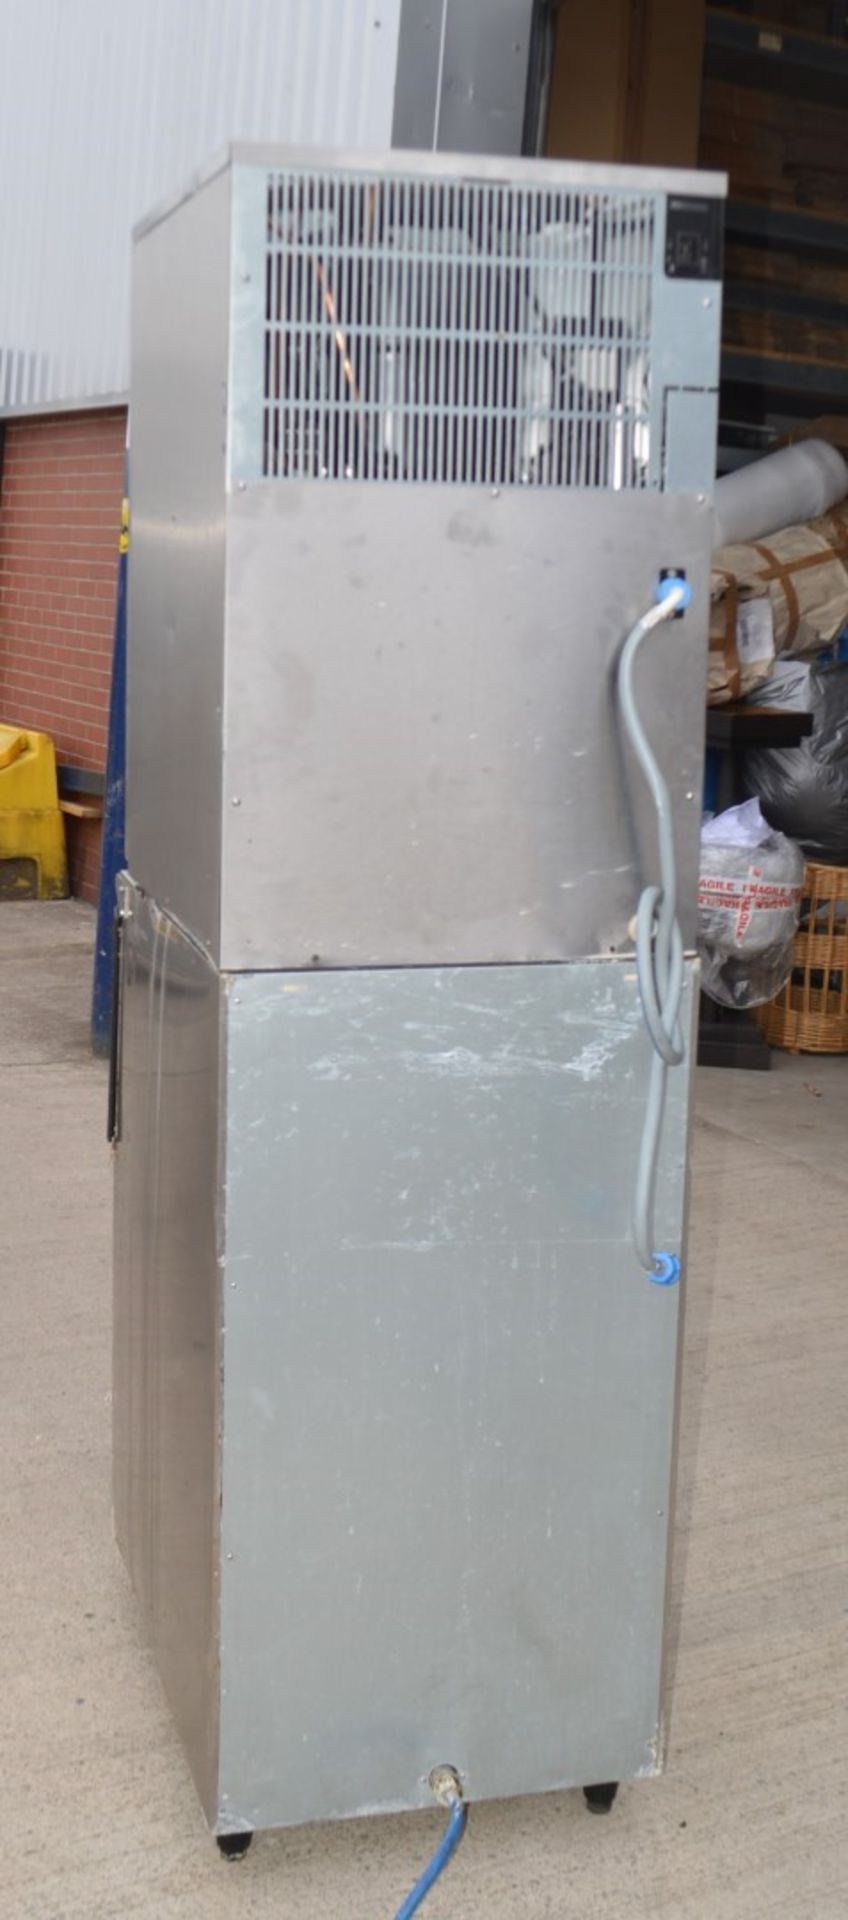 1 x Hoshizaki IM-240ANE Hydrocarbon Modular Ice Machine (210kg/24hr) With 140kg Capacity Storage Bin - Image 7 of 10